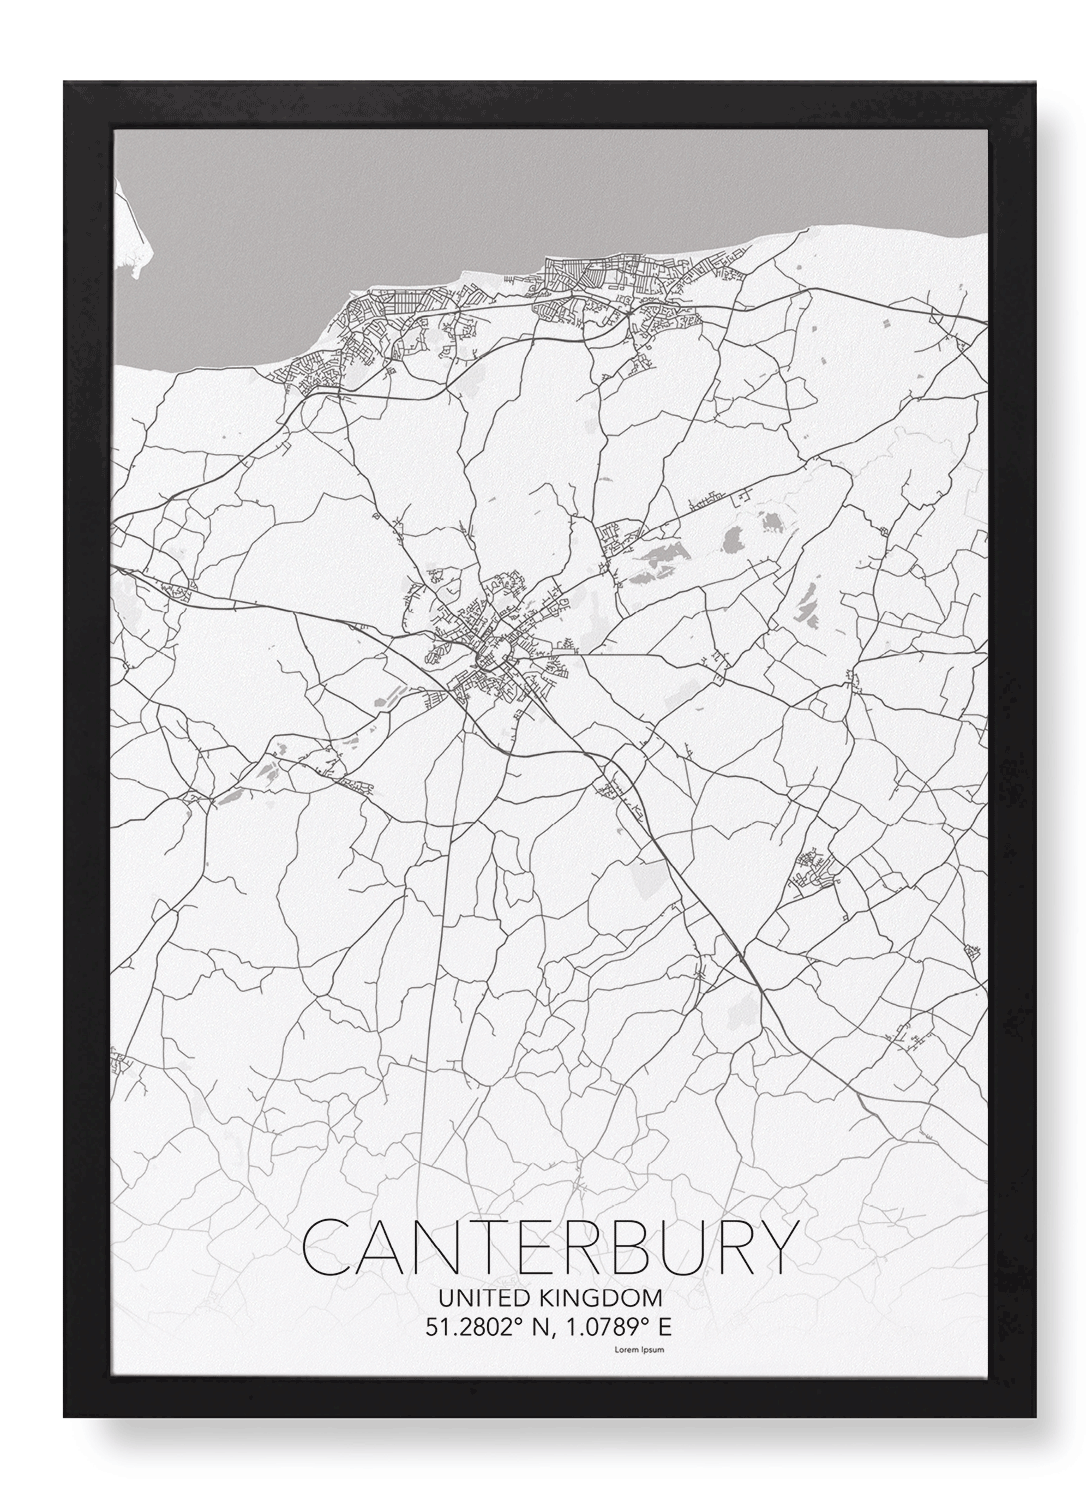 CANTERBURY FULL MAP